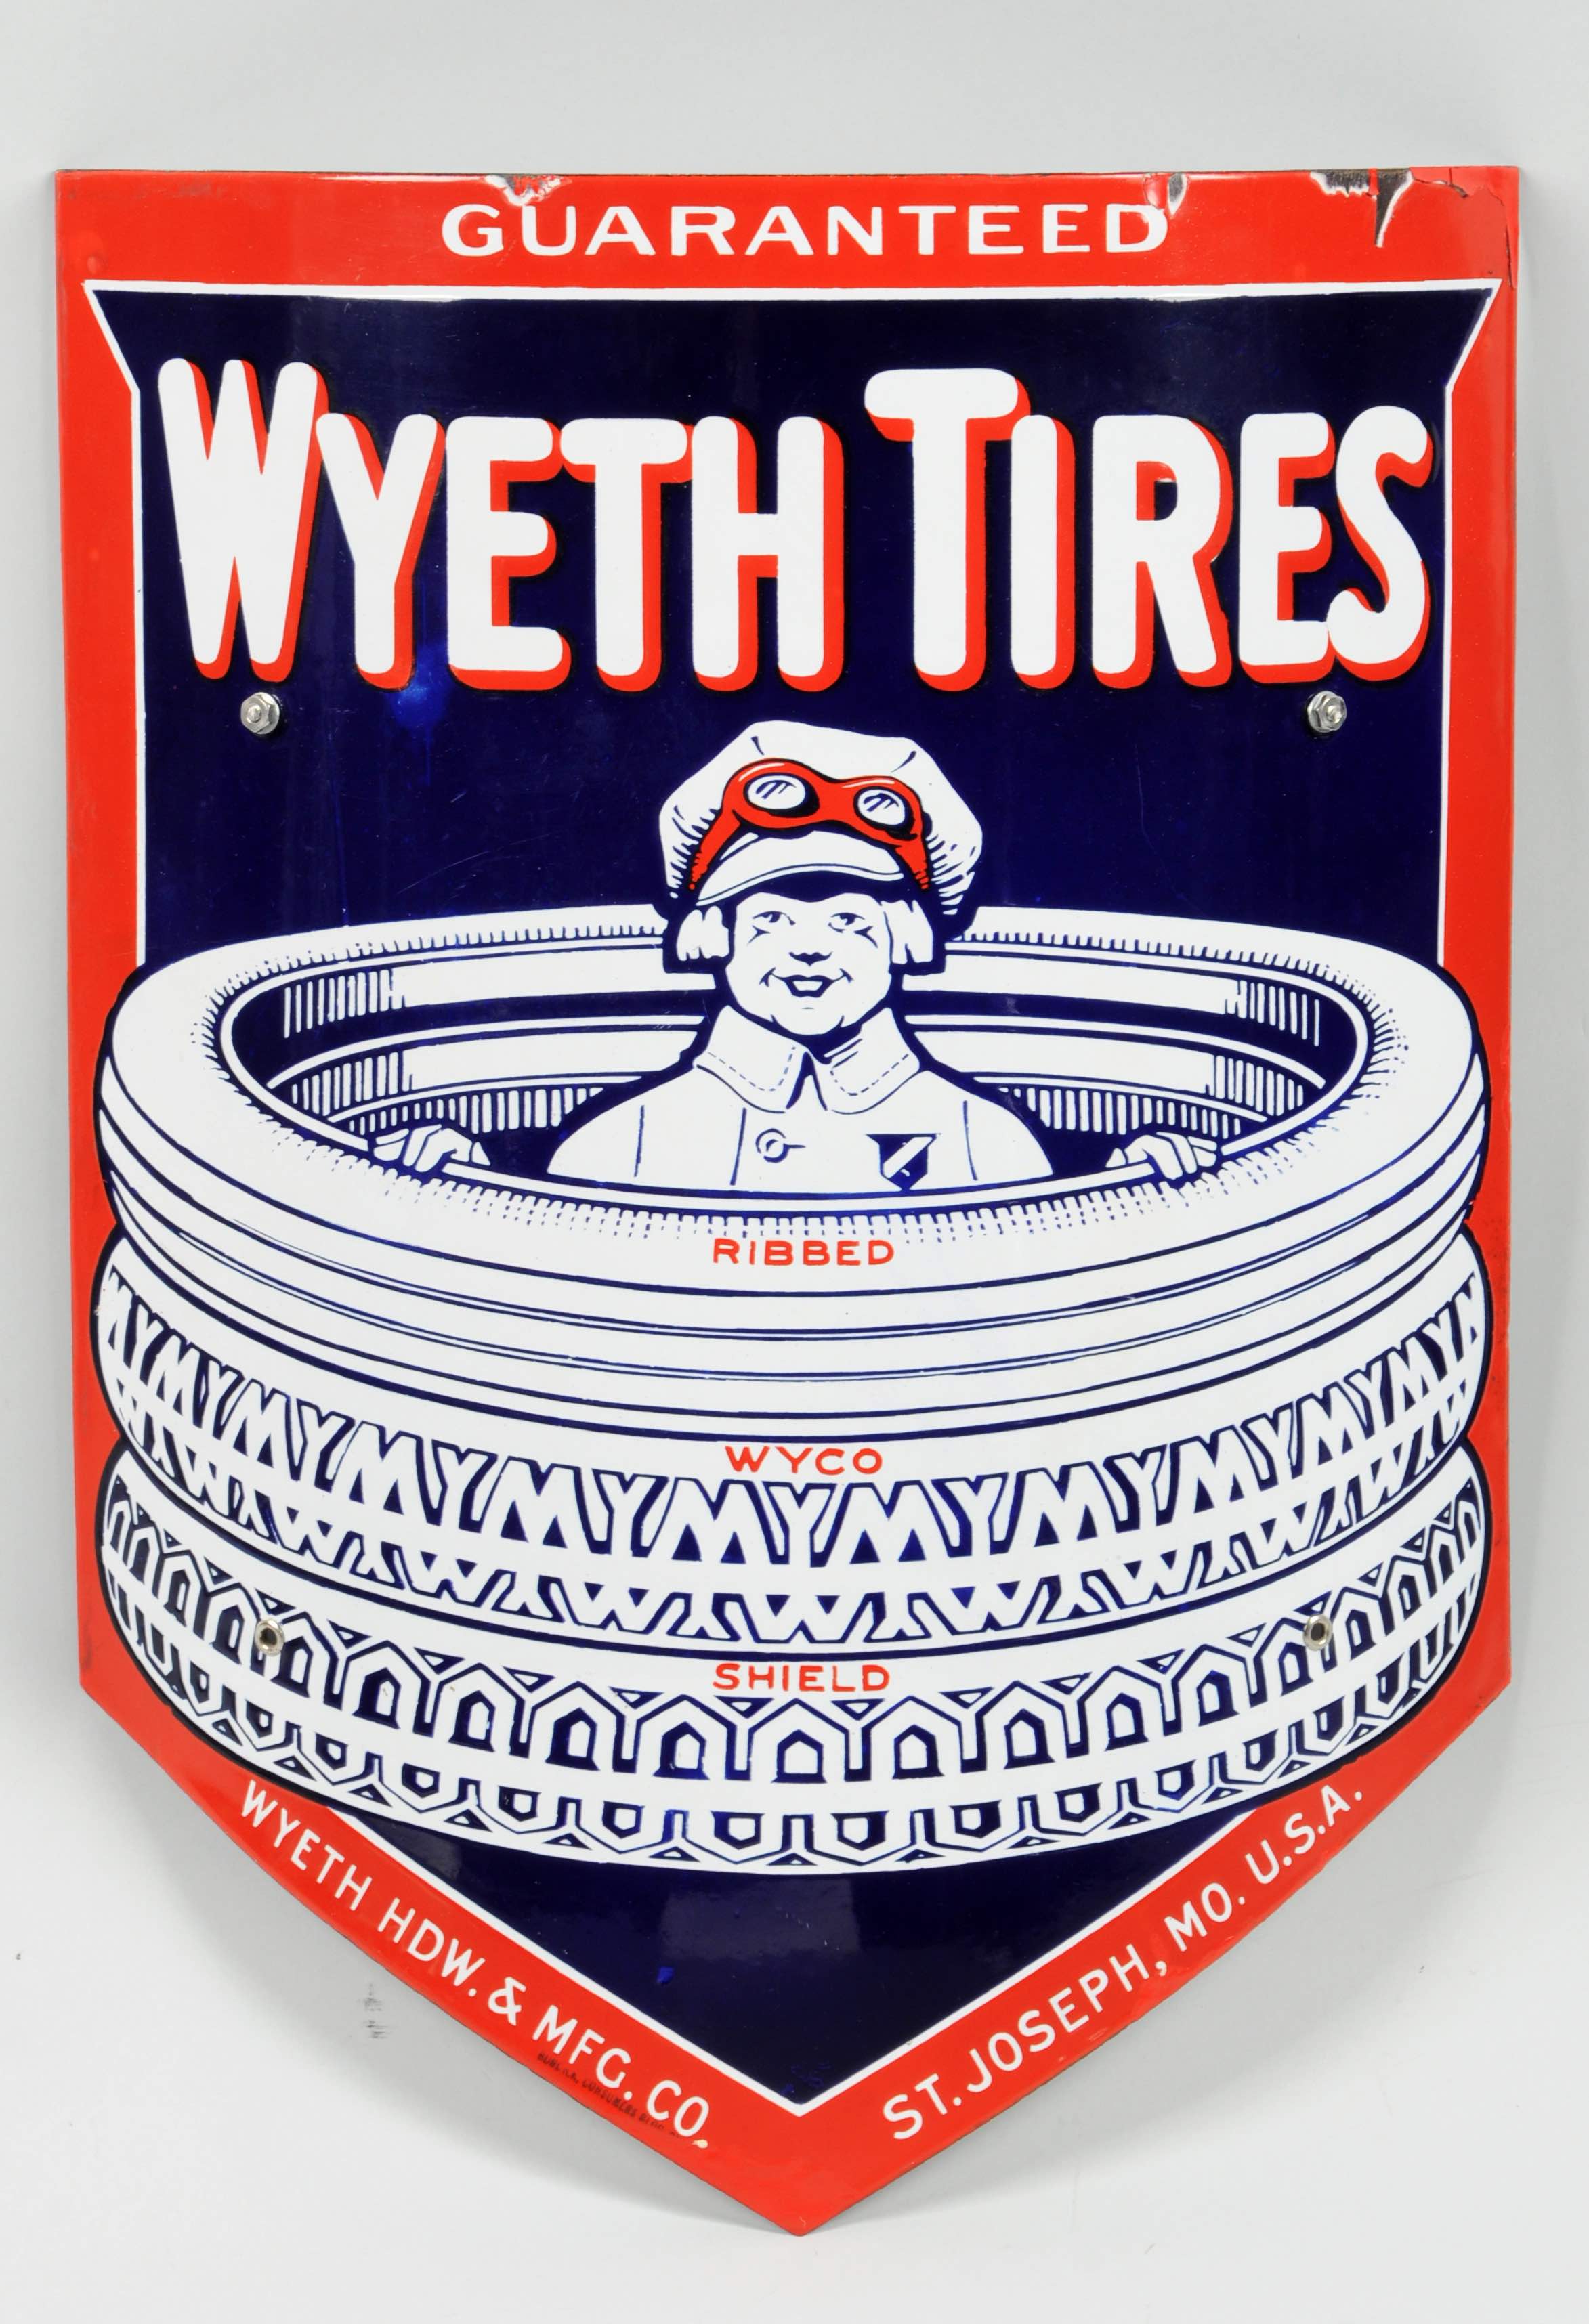 Wyeth Tires w/ Boy Sitting in Tires Logo Porcelain Sign, estimated at $10,000-20,000.